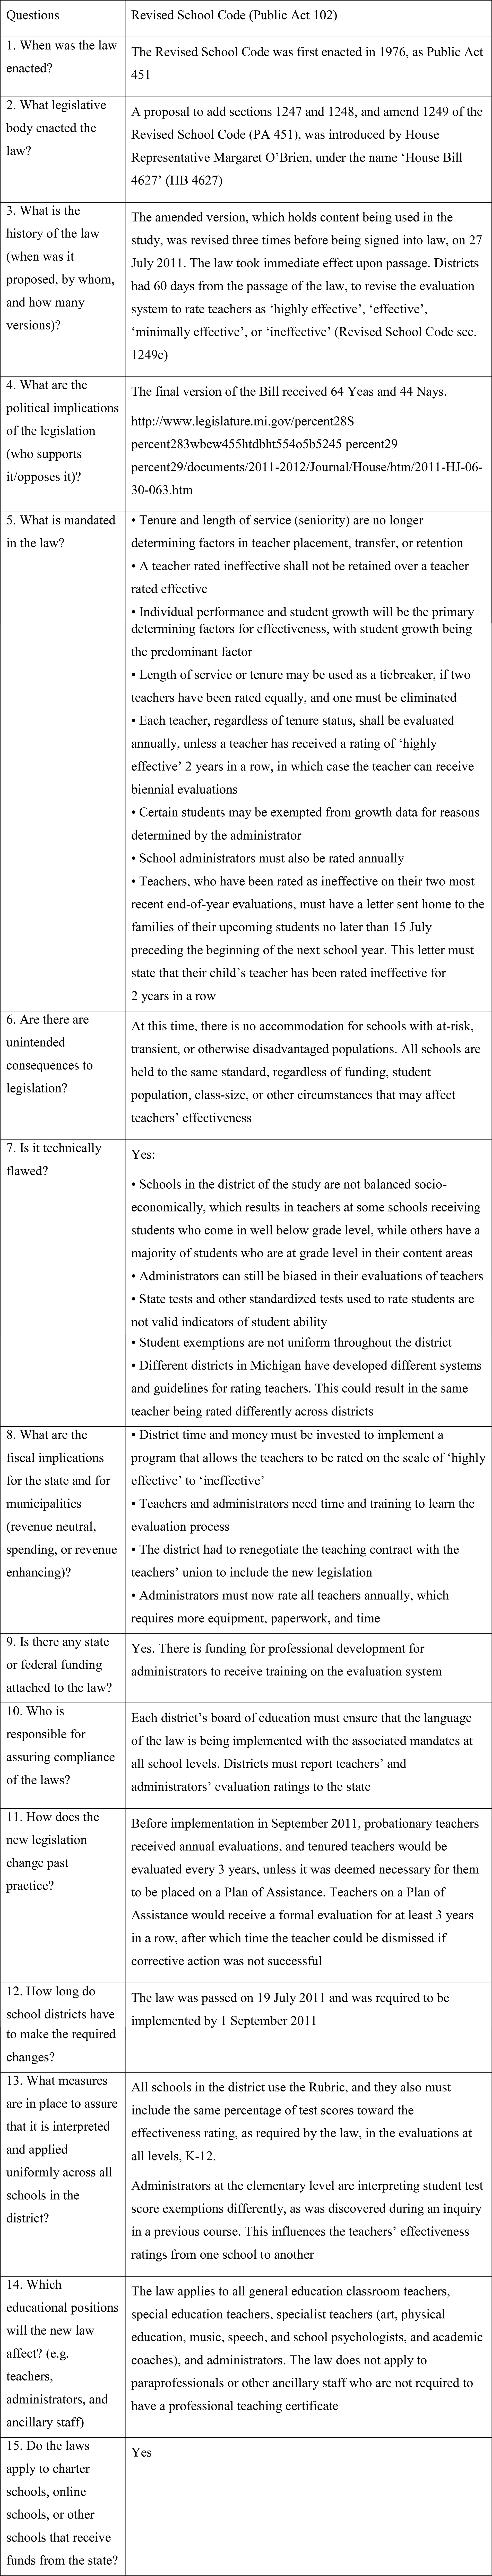 Figure 1. Legislative checklist for the Revised School Code.